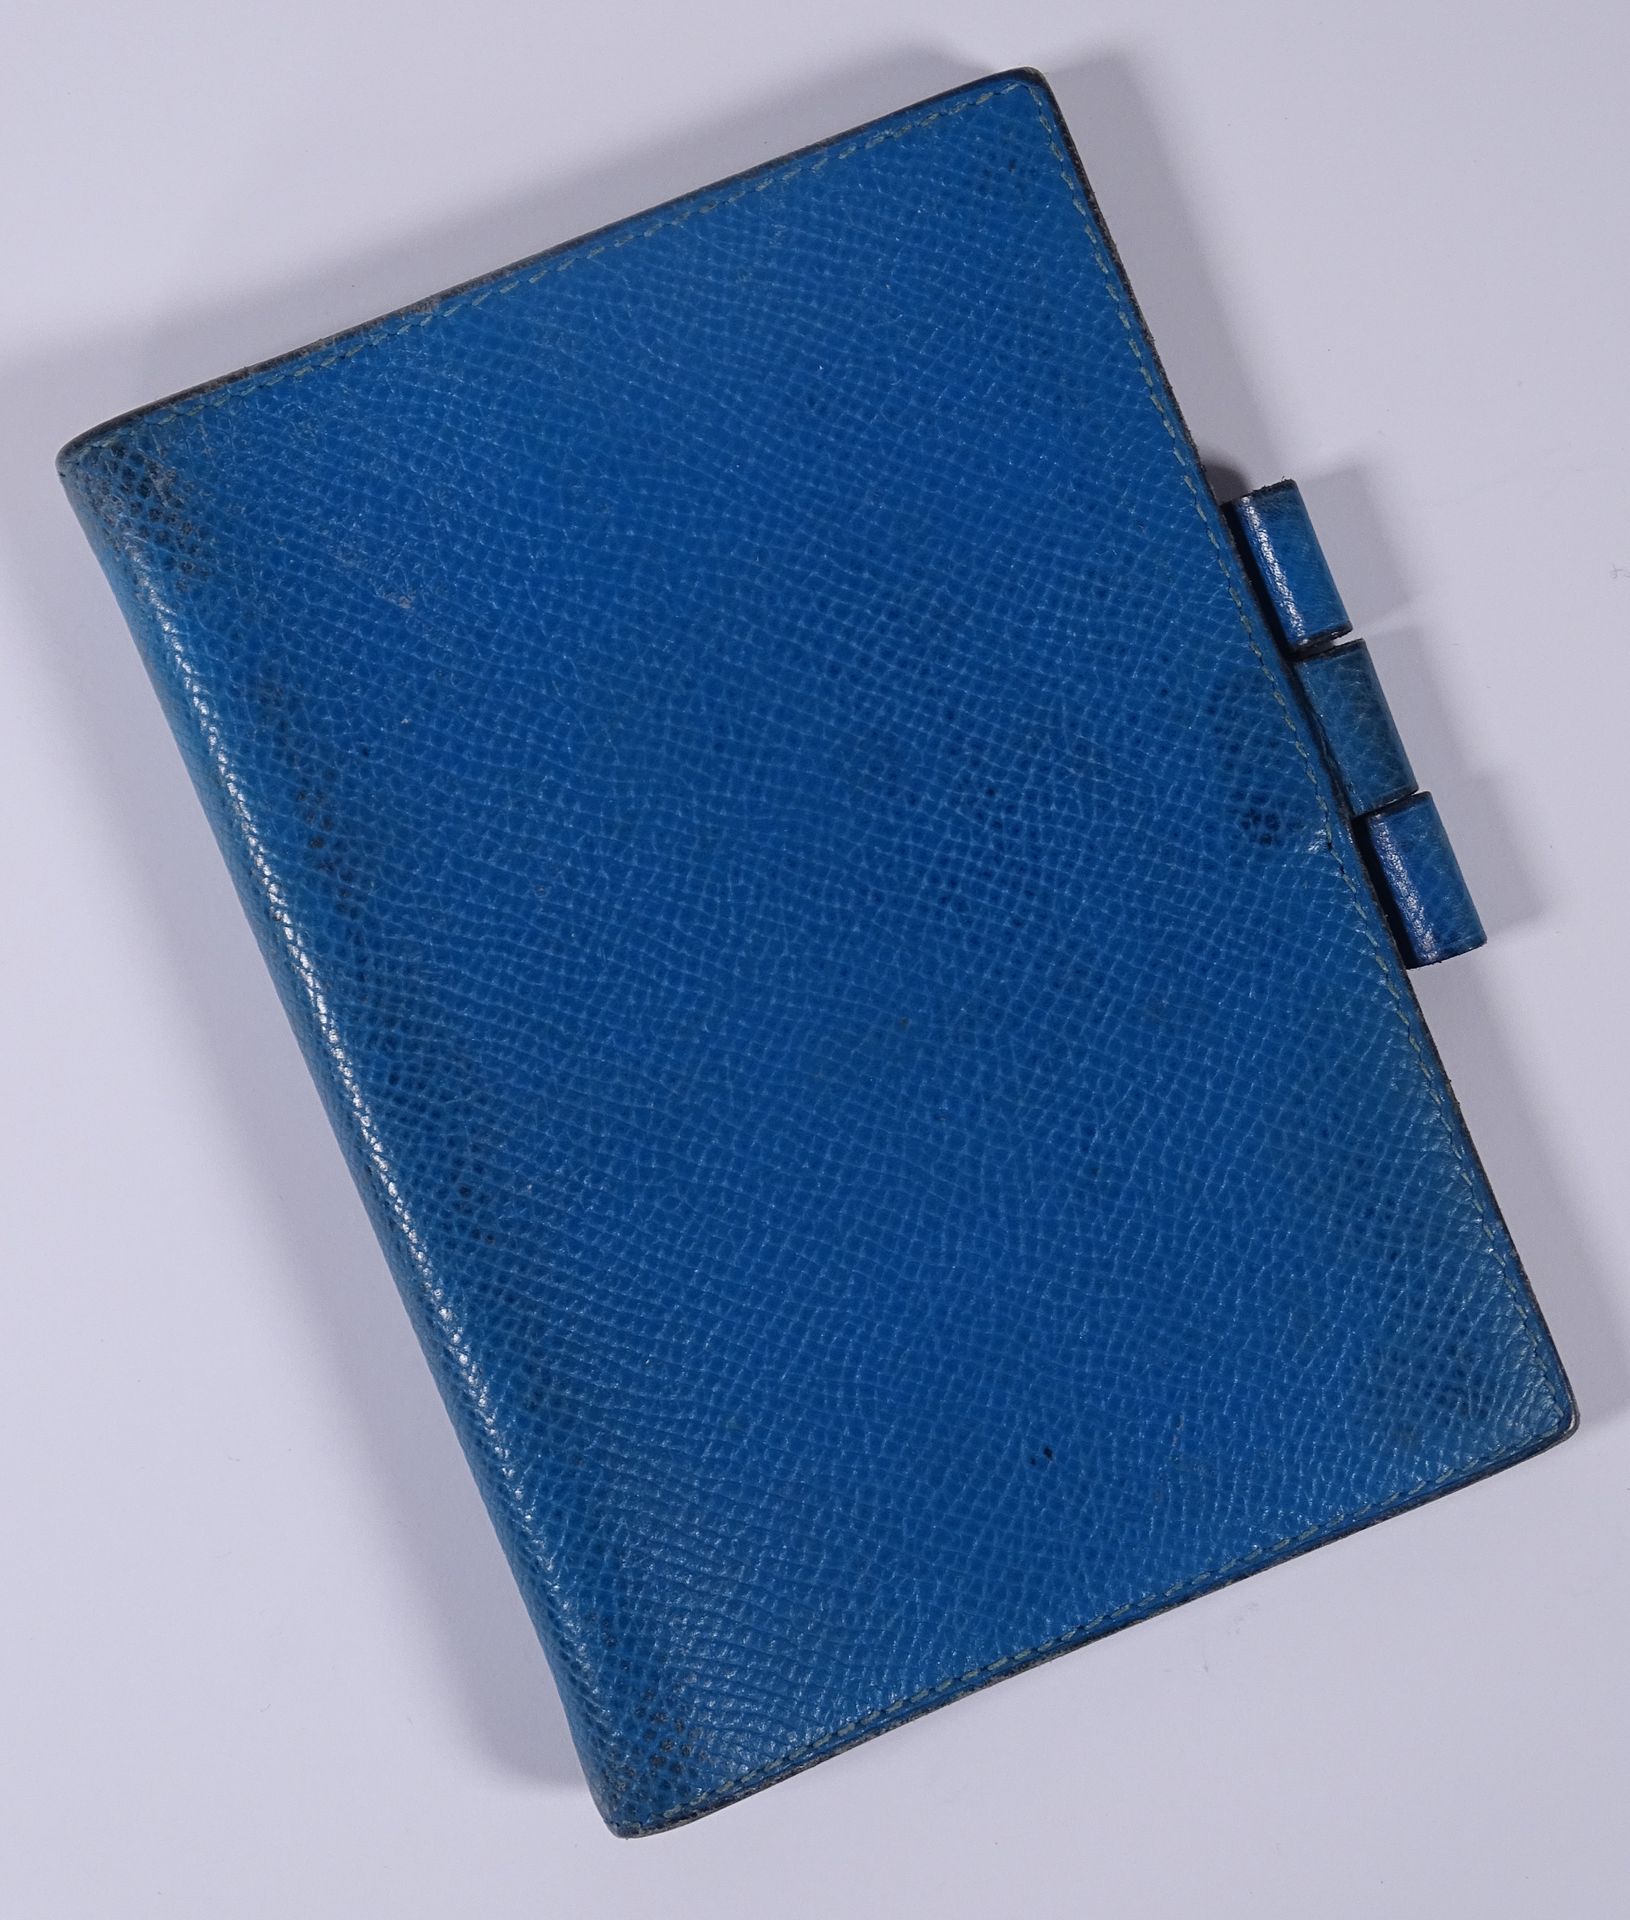 HERMES Portablocco in pelle blu.

13,5 x 9,5 cm.

(quaderno e penna mancanti, mi&hellip;